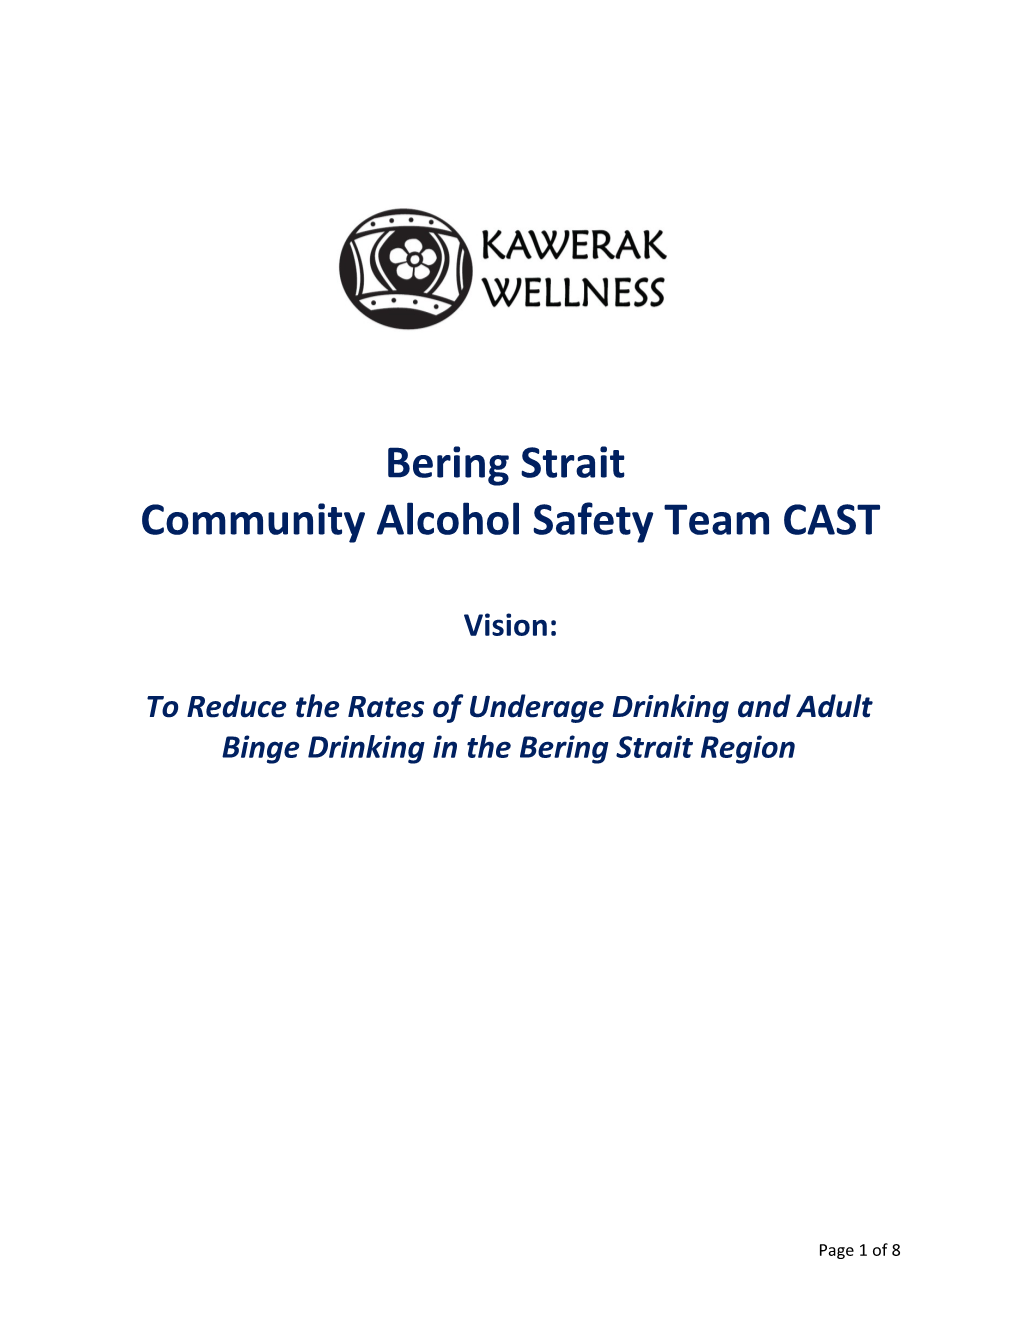 Community Alcohol Safety Team CAST